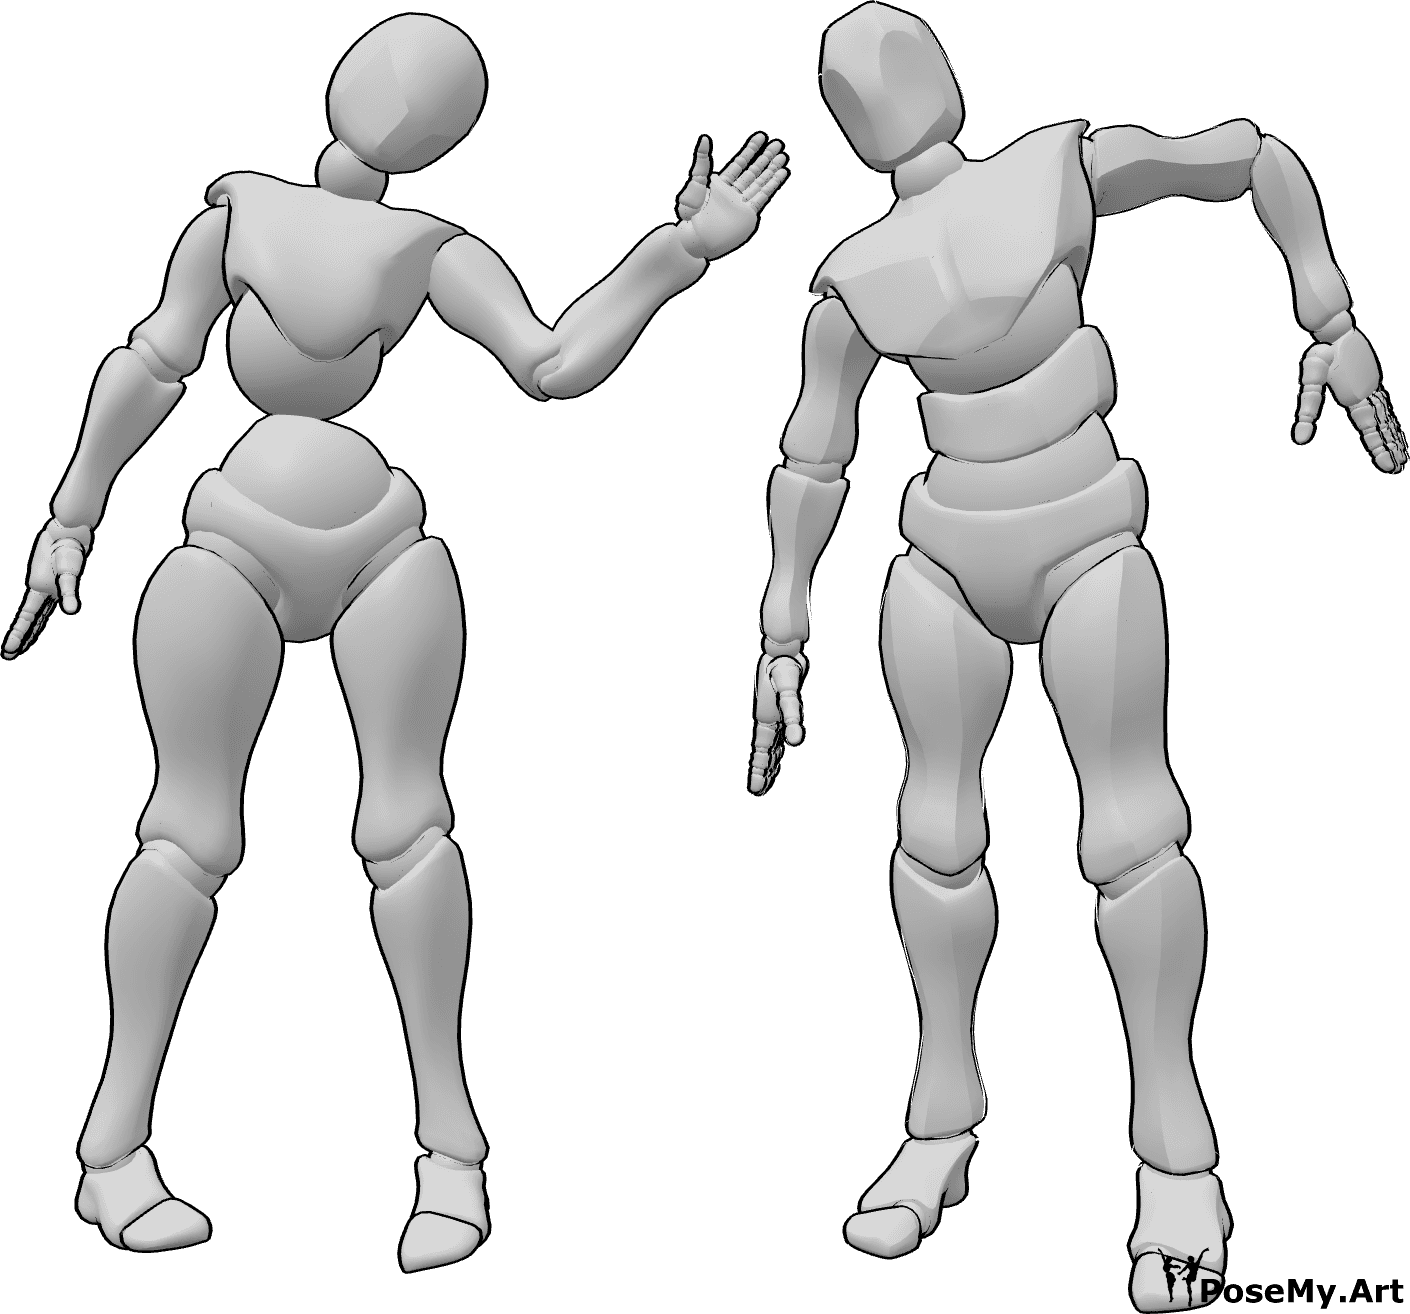 Pose Reference- Creepy female male pose - Creepy female and male walking zombie-like pose